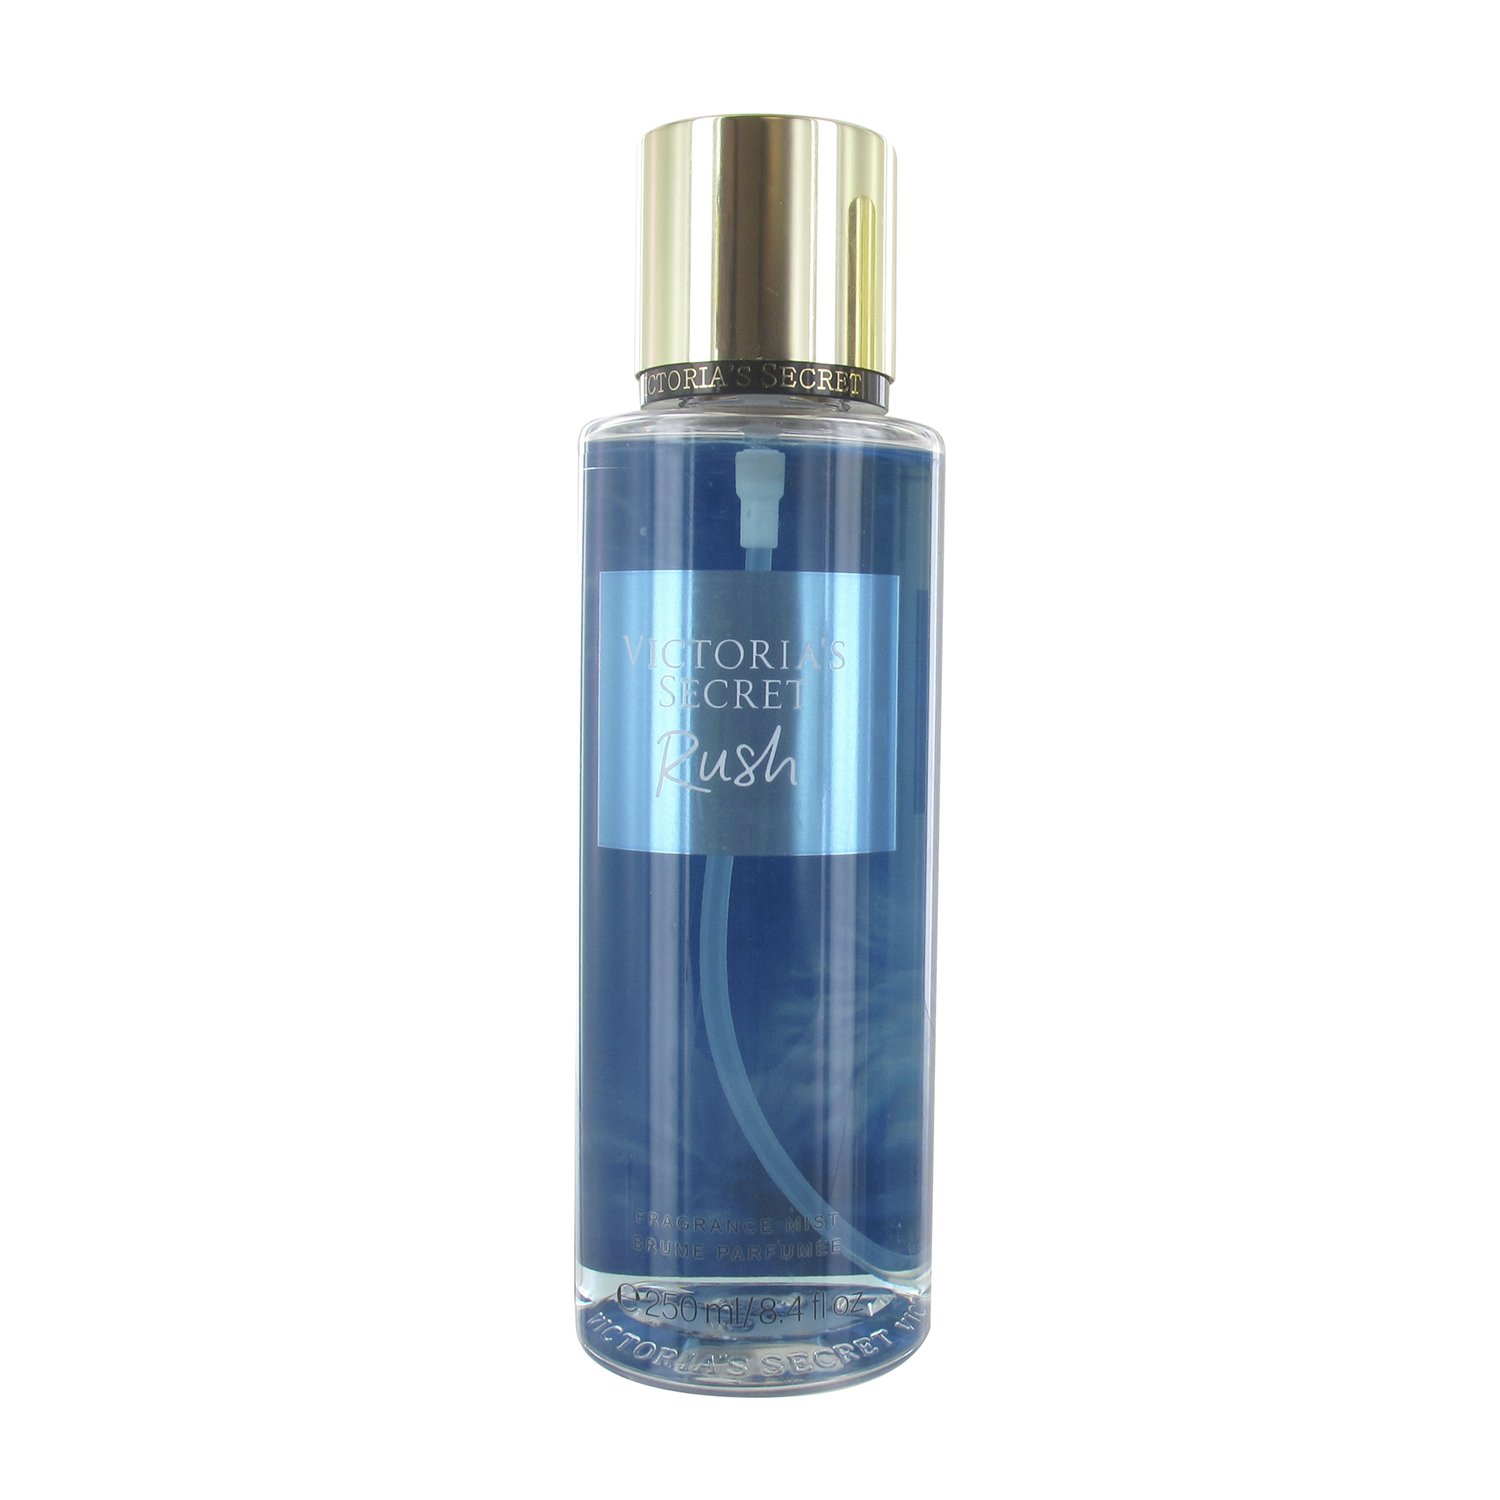 Buy Victoria's Secret Rush Body Mist - 250ml | Perfume | Argos